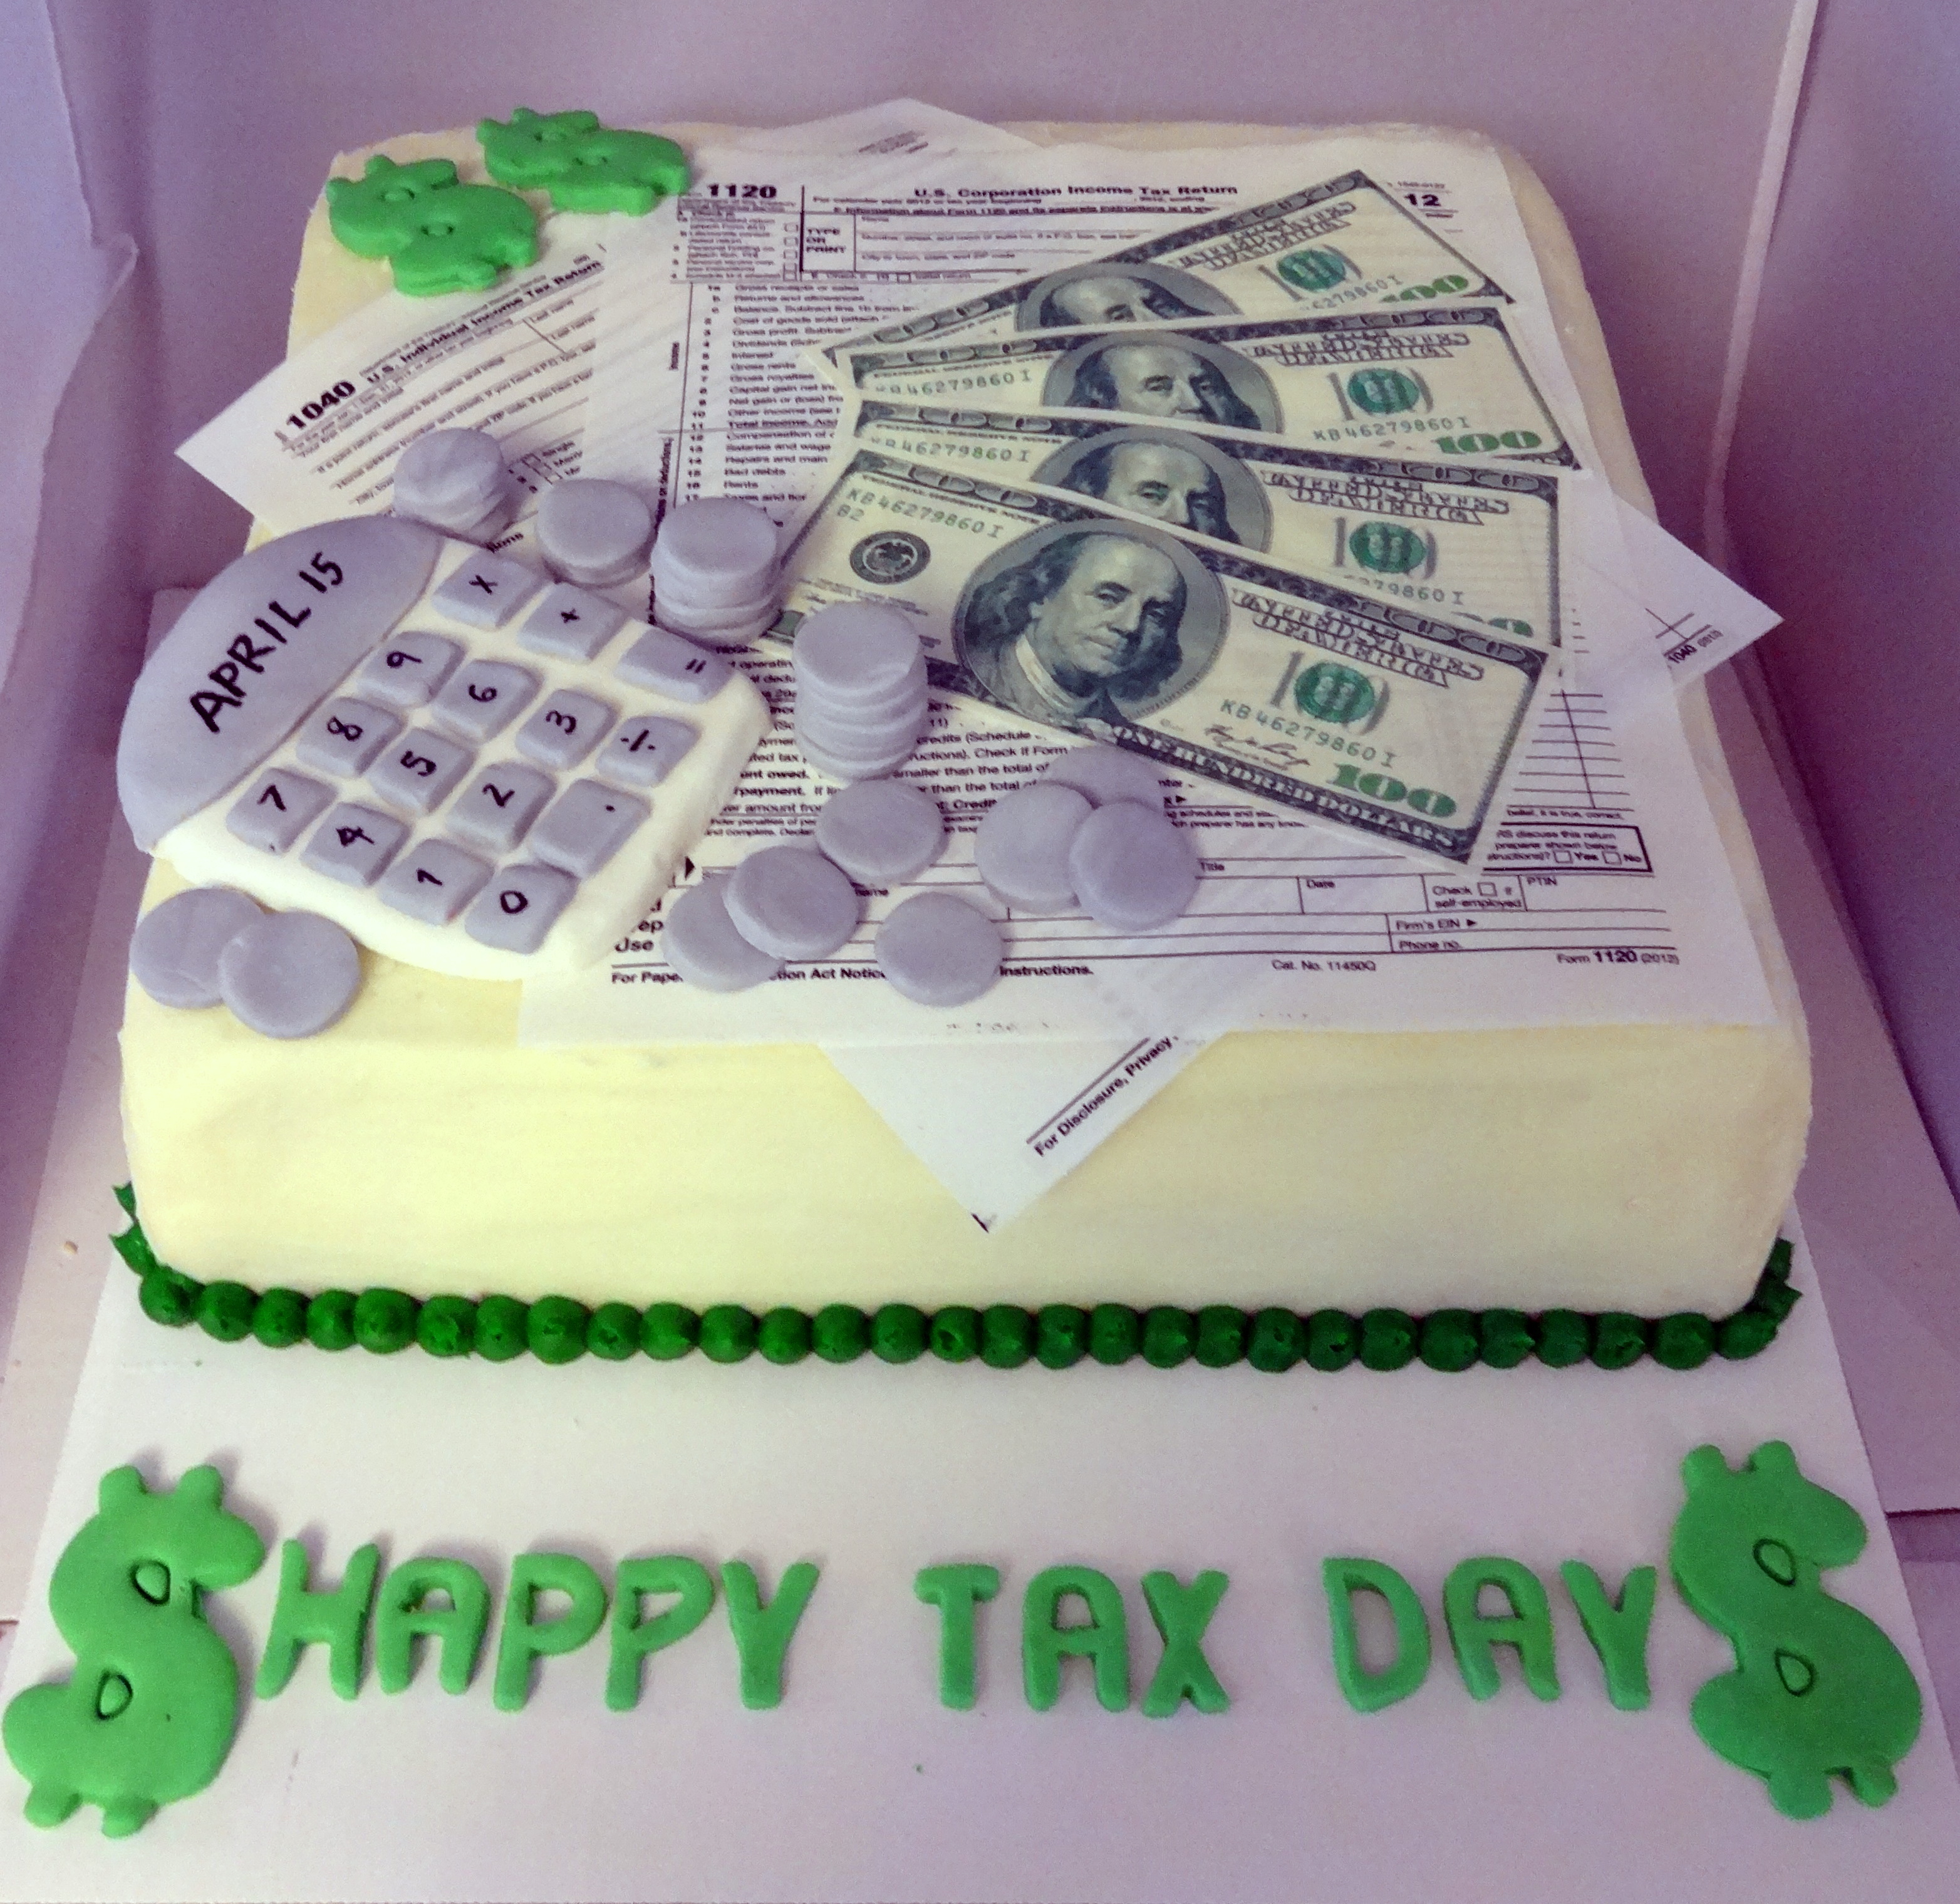 9 Funny Accountant Retirement Cakes Photo Retirement Party Cake Accountant Birthday...